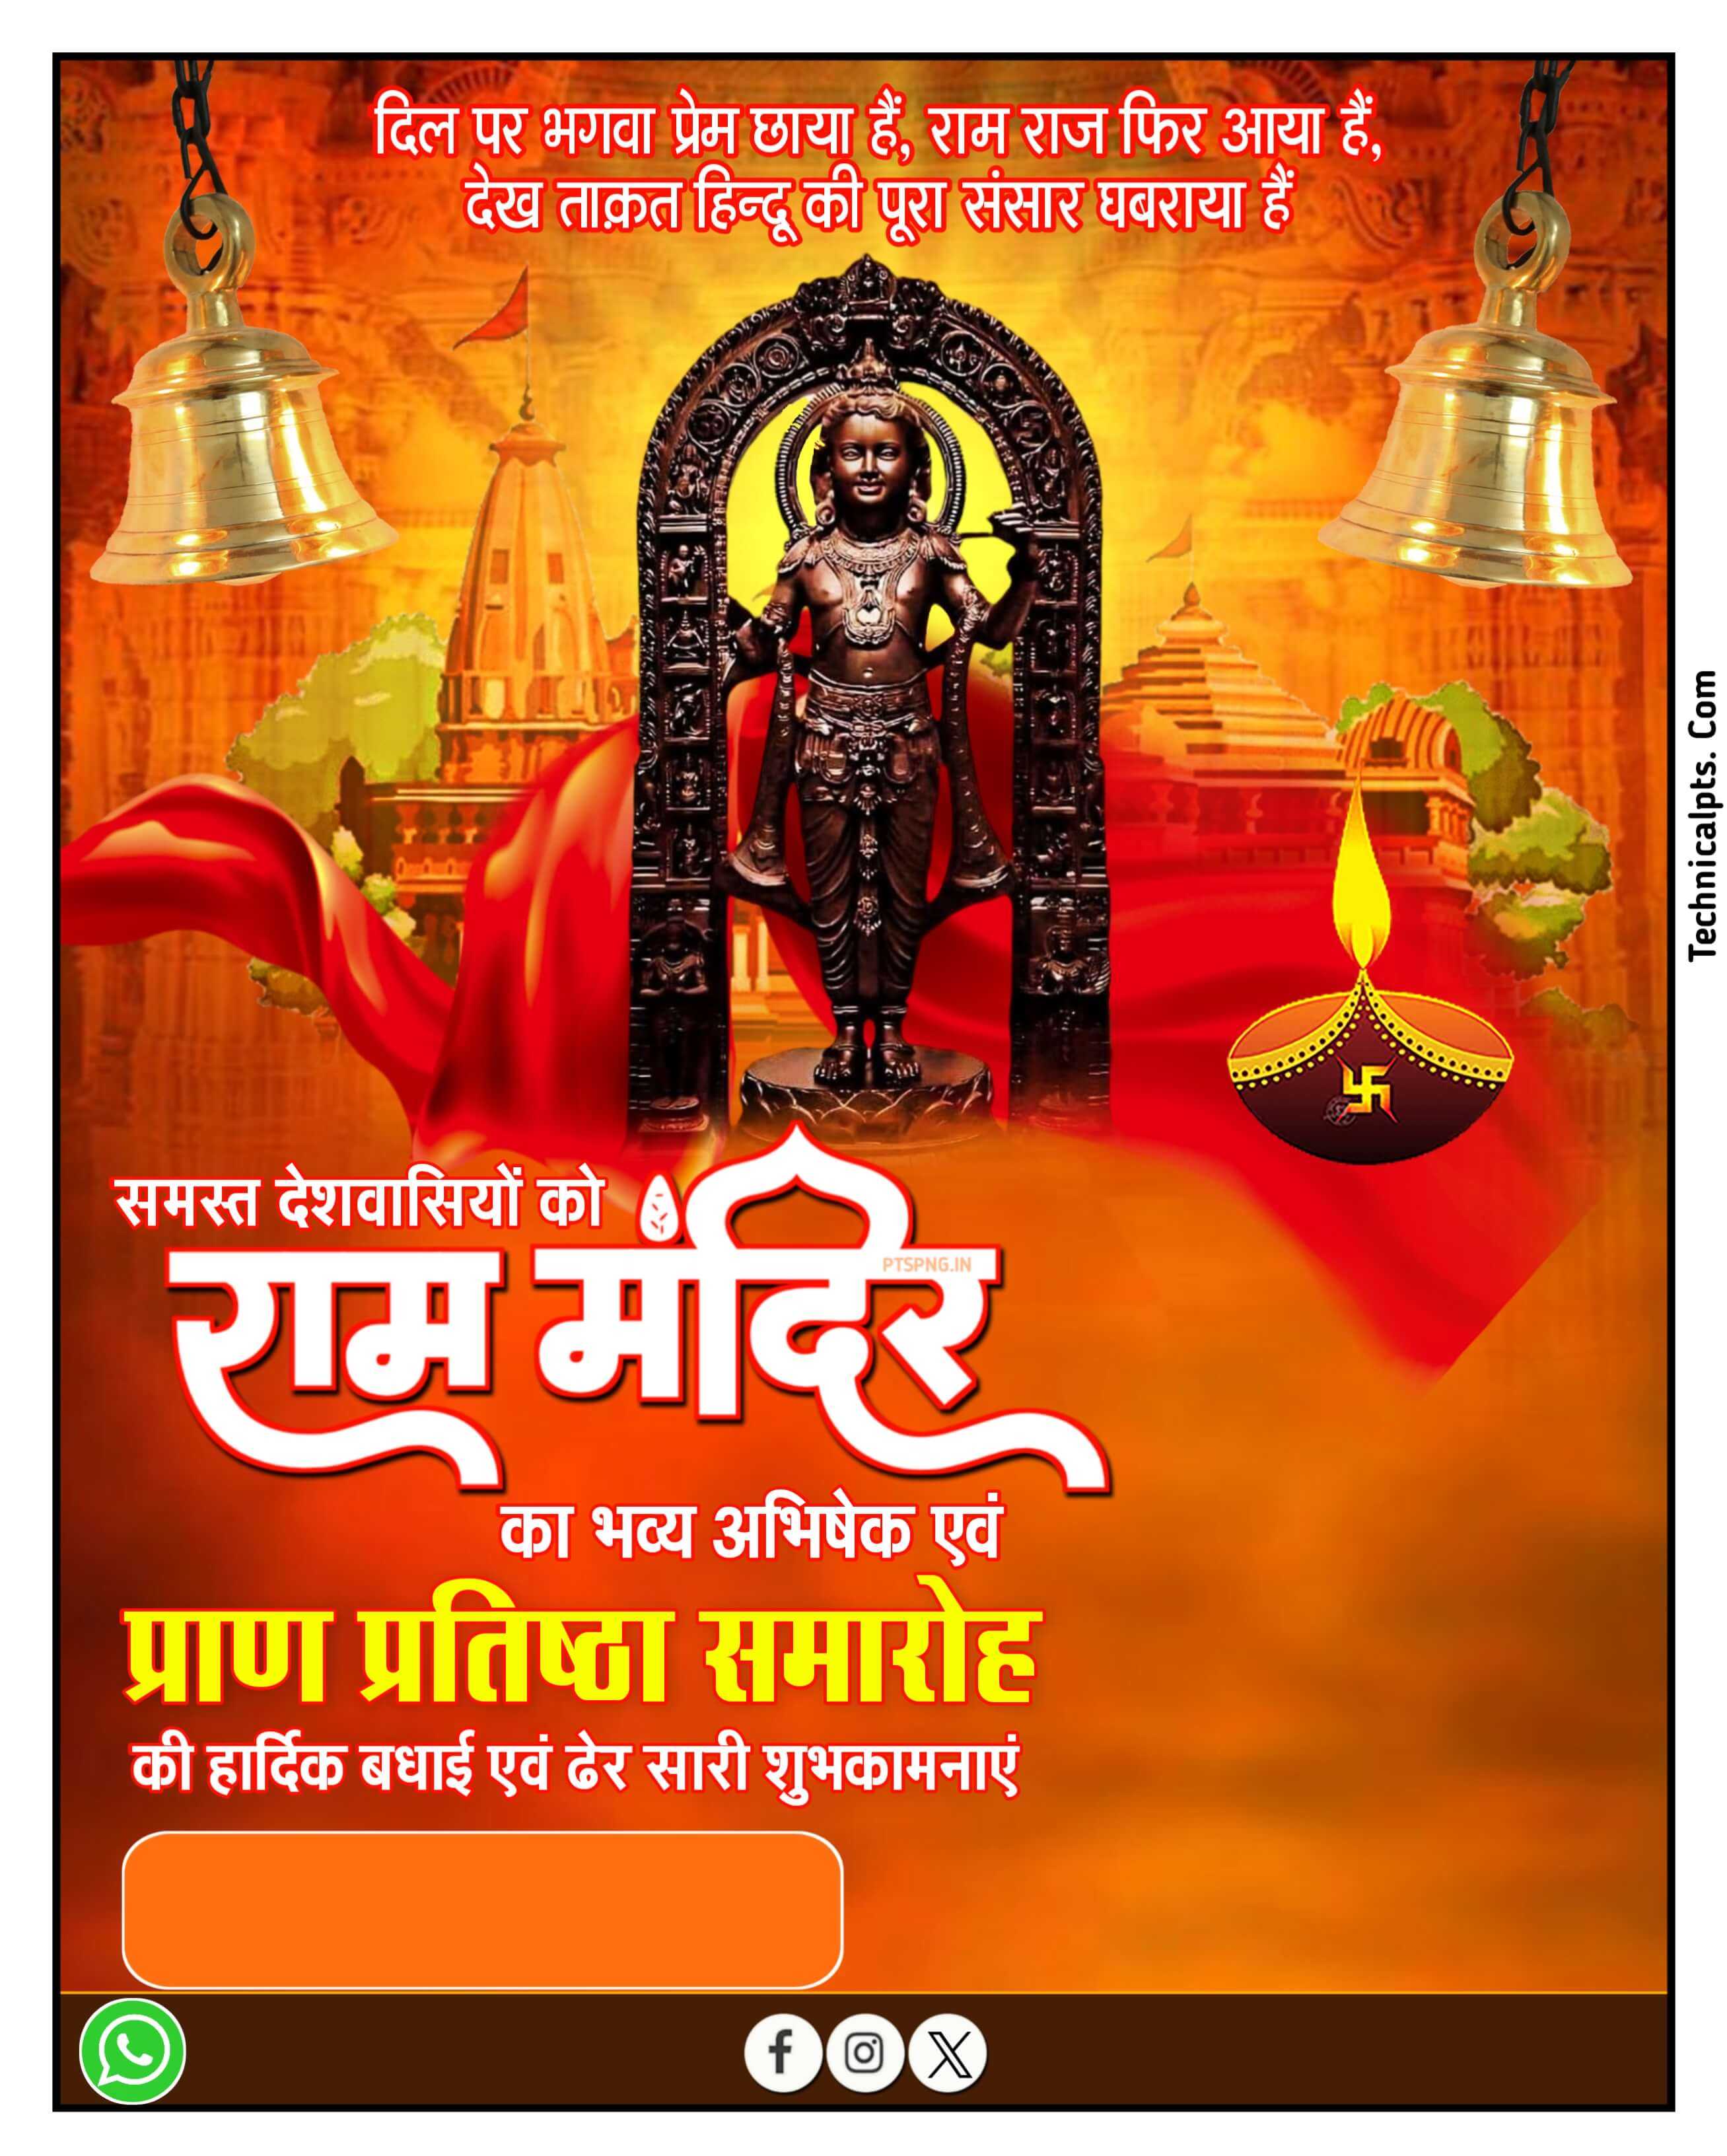 राम मंदिर पोस्टर 22 जनवरी| Ram Mandir poster PlP file download| Ayodhya